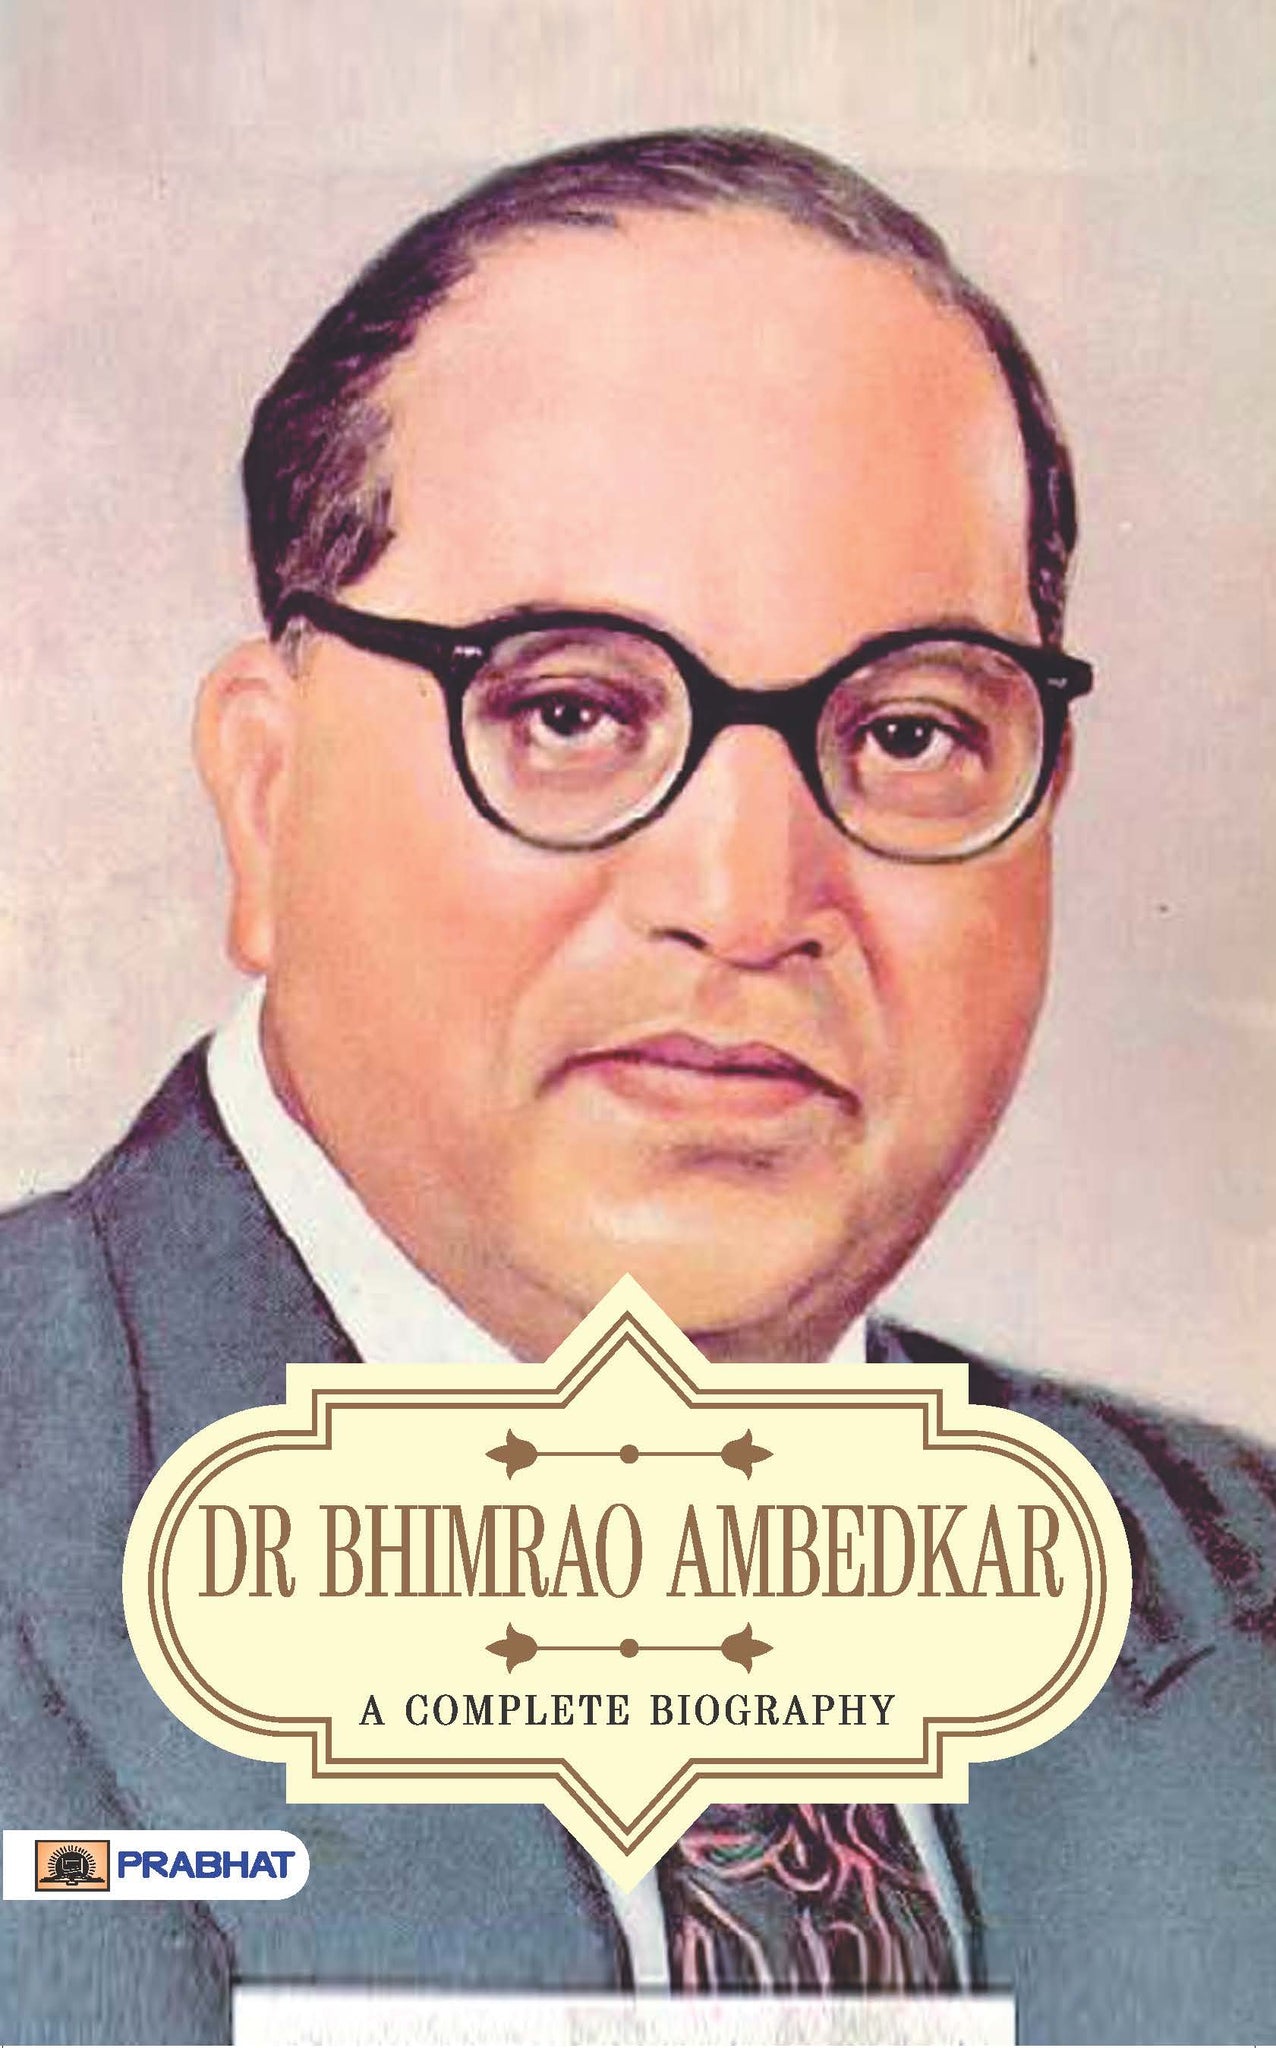 A Complete Biography of Dr. Amedkar